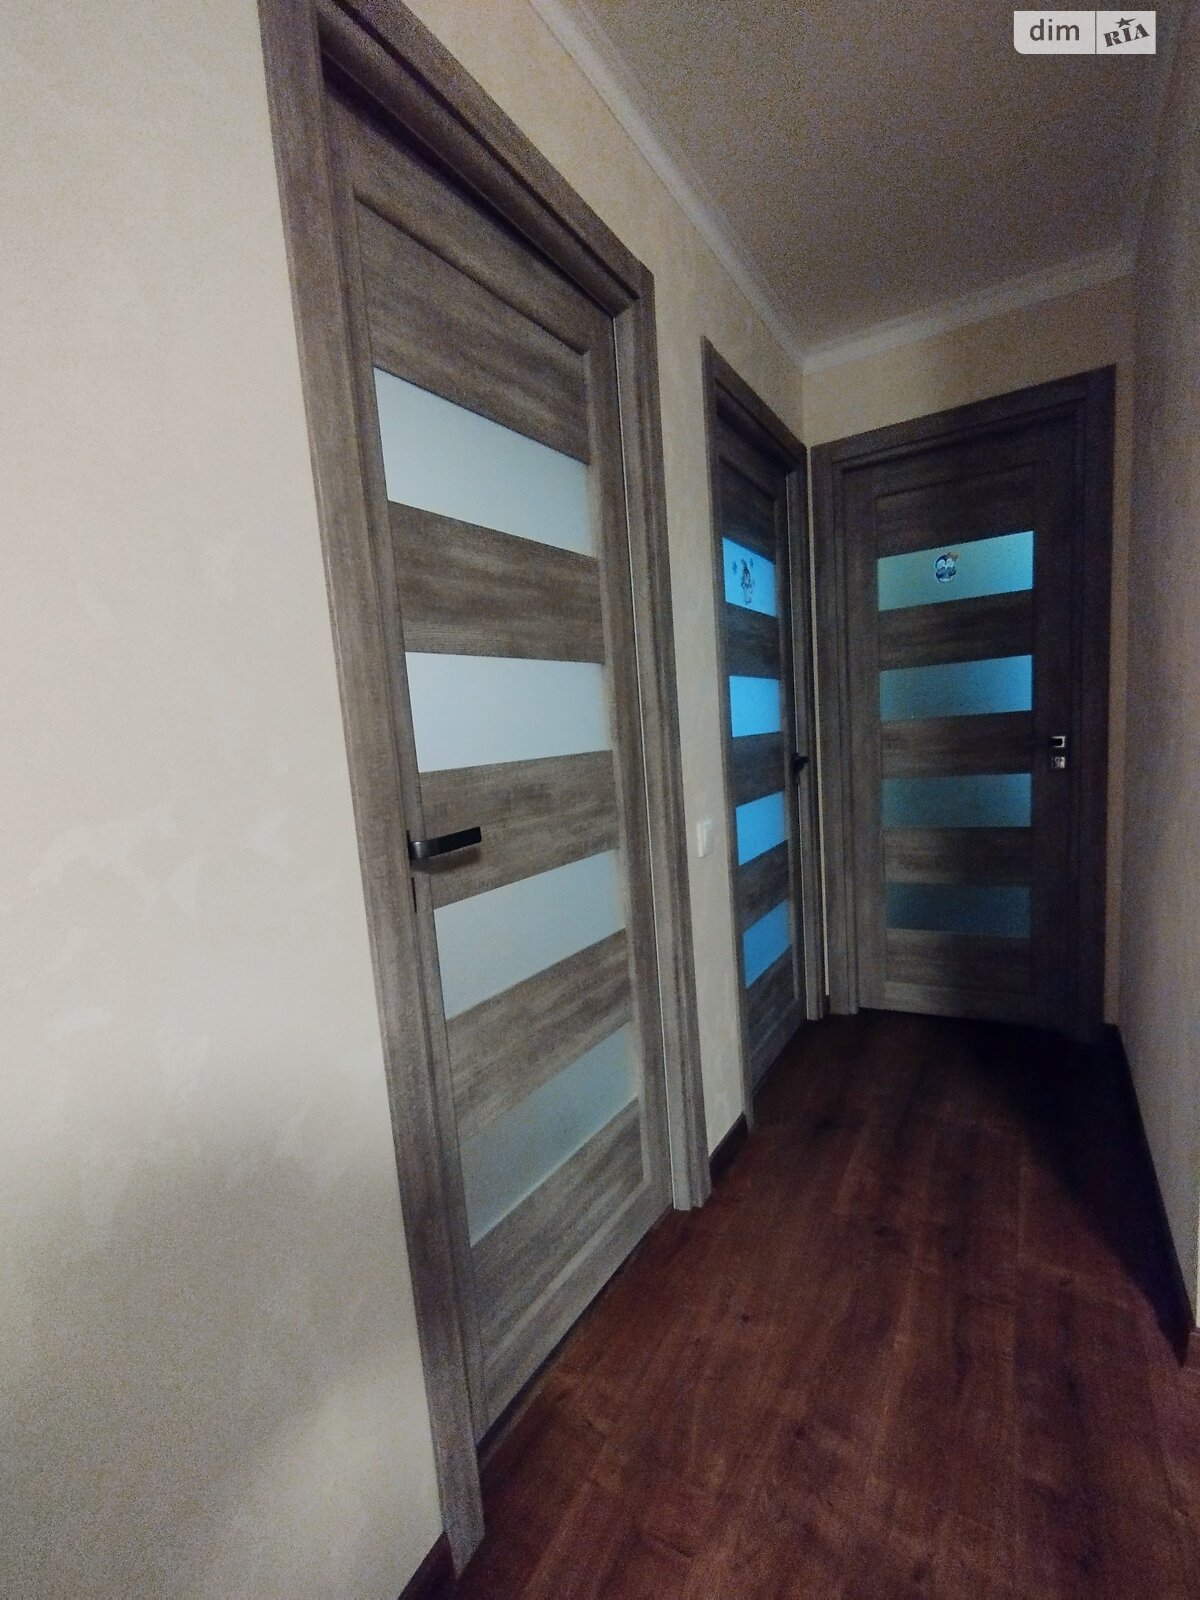 Продажа трехкомнатной квартиры в Тернополе, на ул. Троллейбусная, район Дружба фото 1